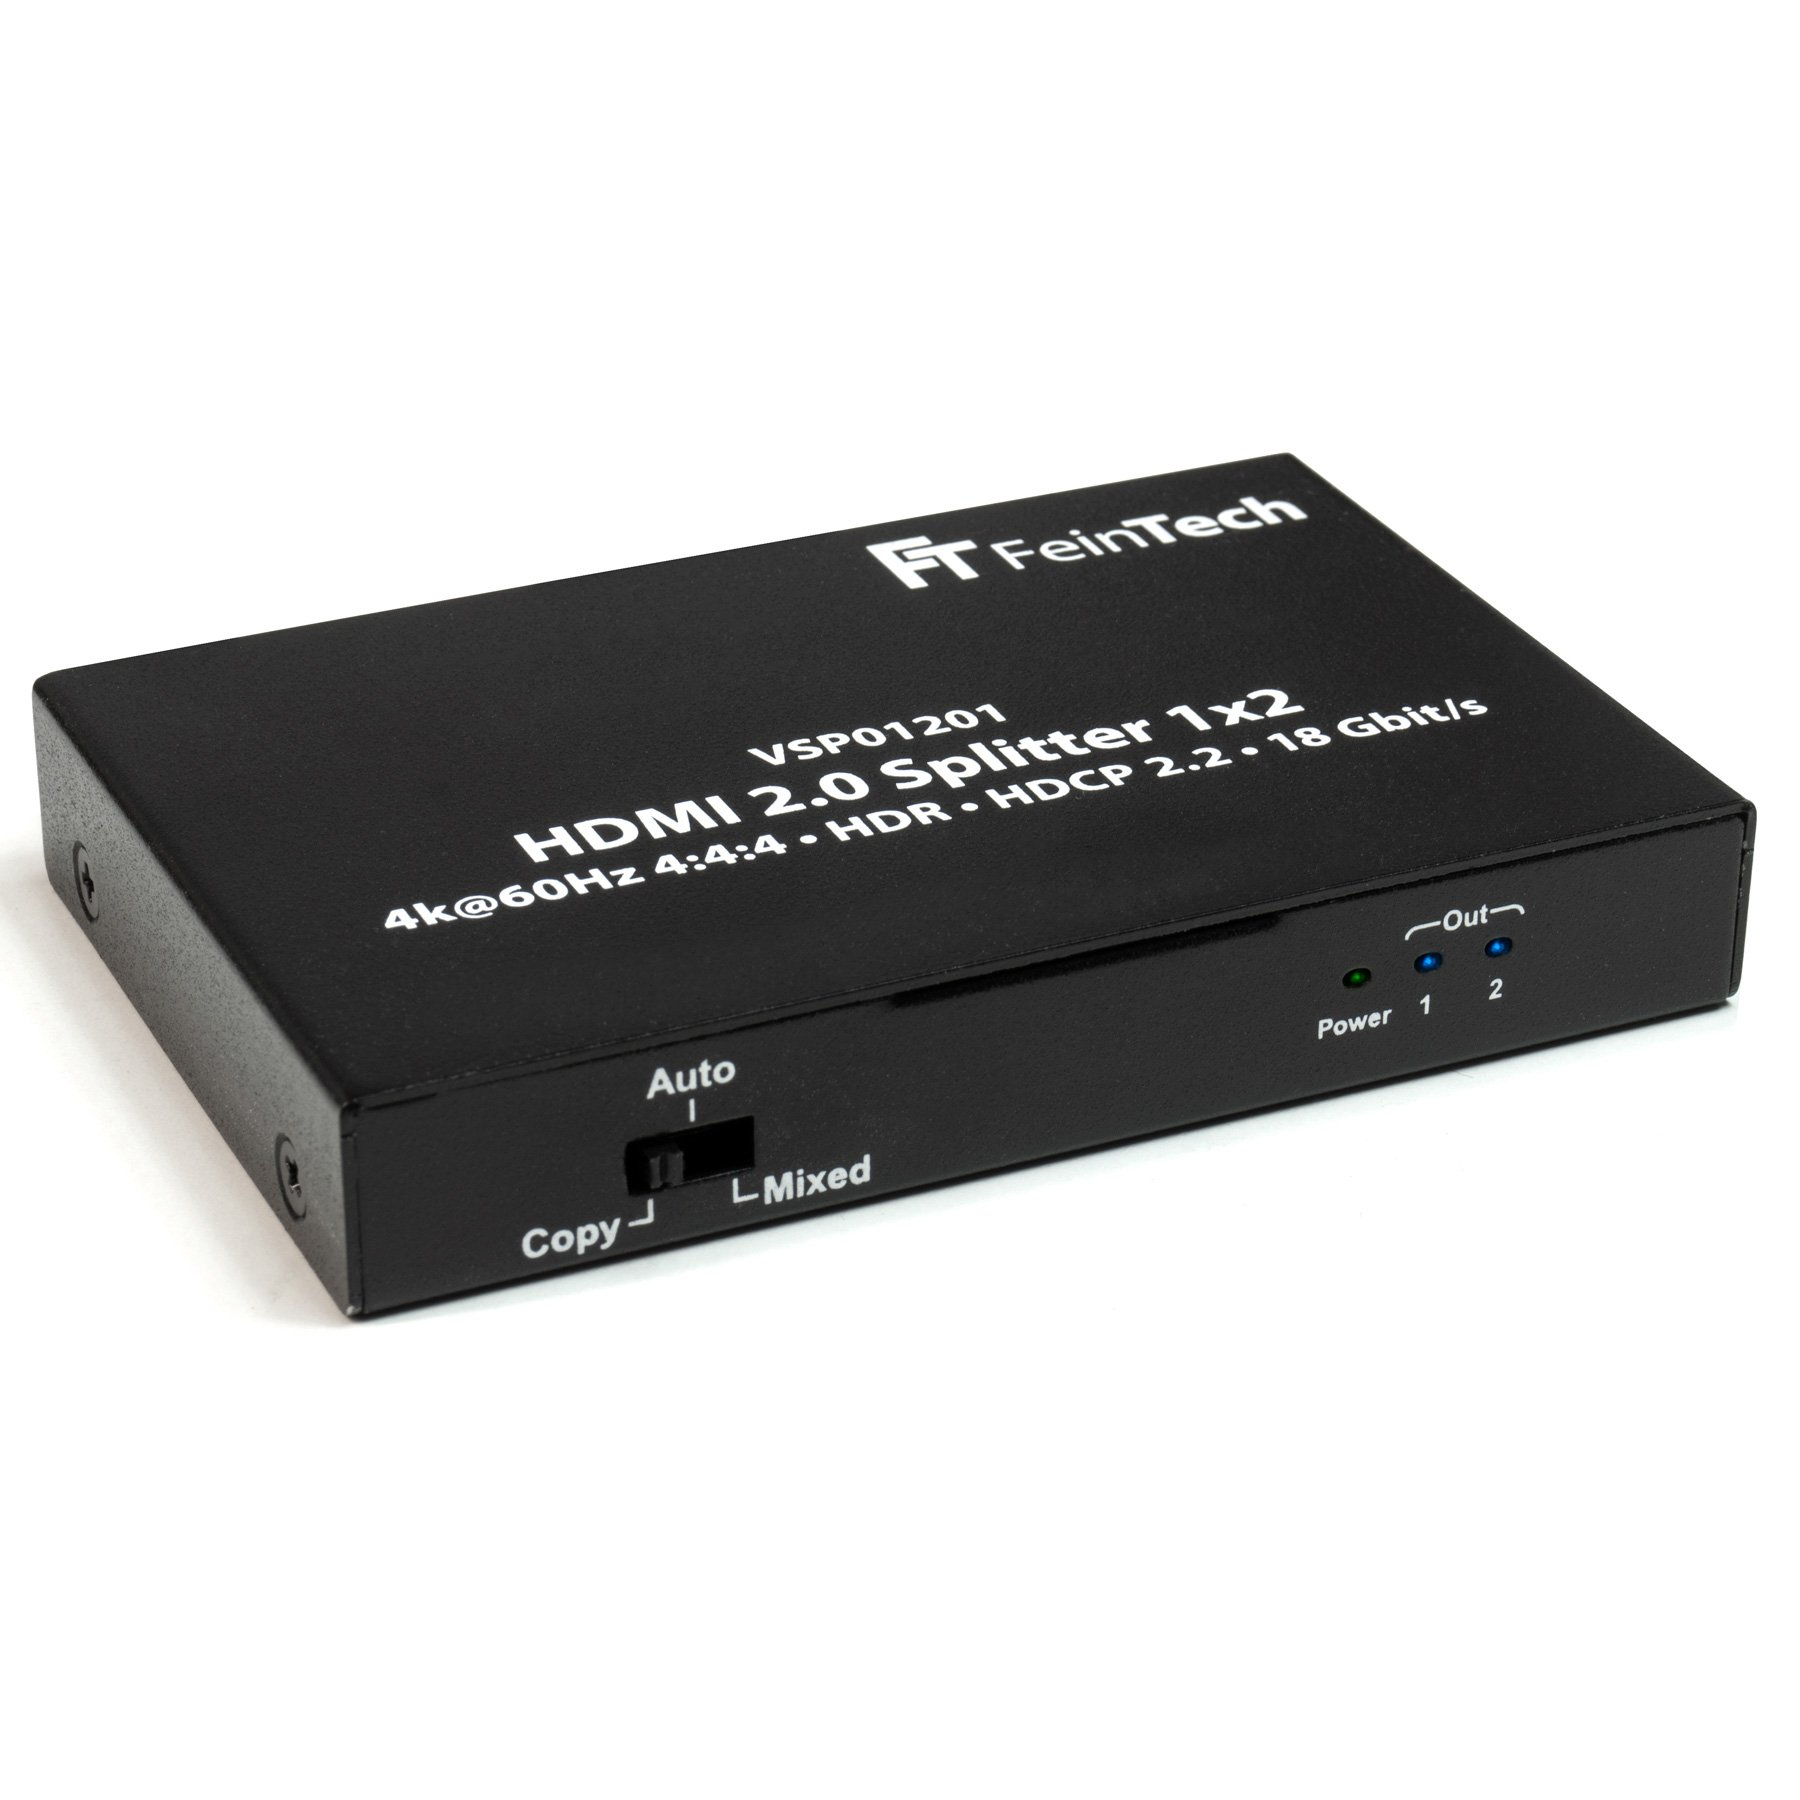 FEINTECH VSP01201 4K Splitter 1 2.0 60Hz In Out 2 HDMI